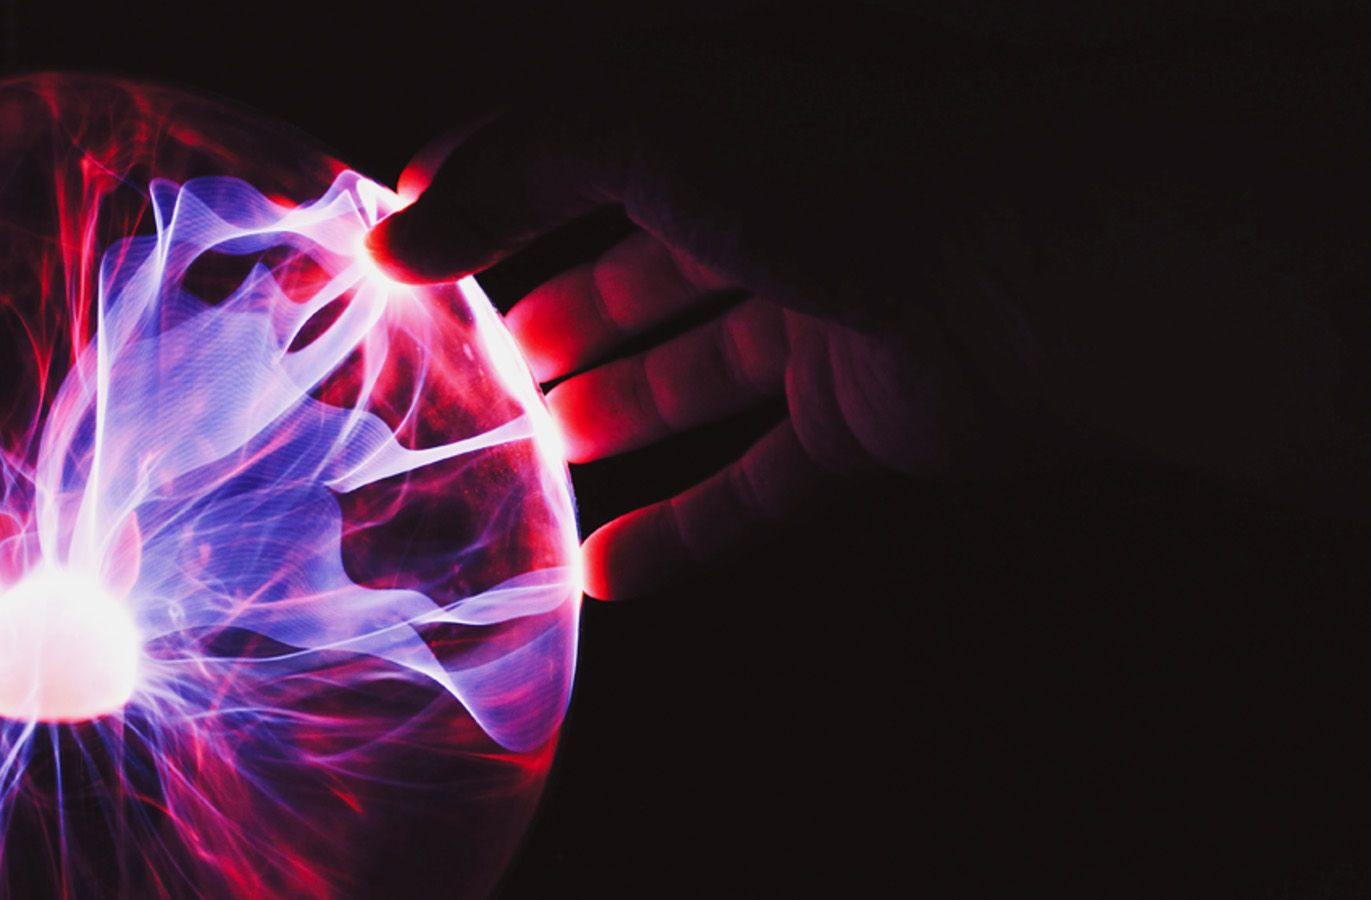 A hand's touching a plasma globe